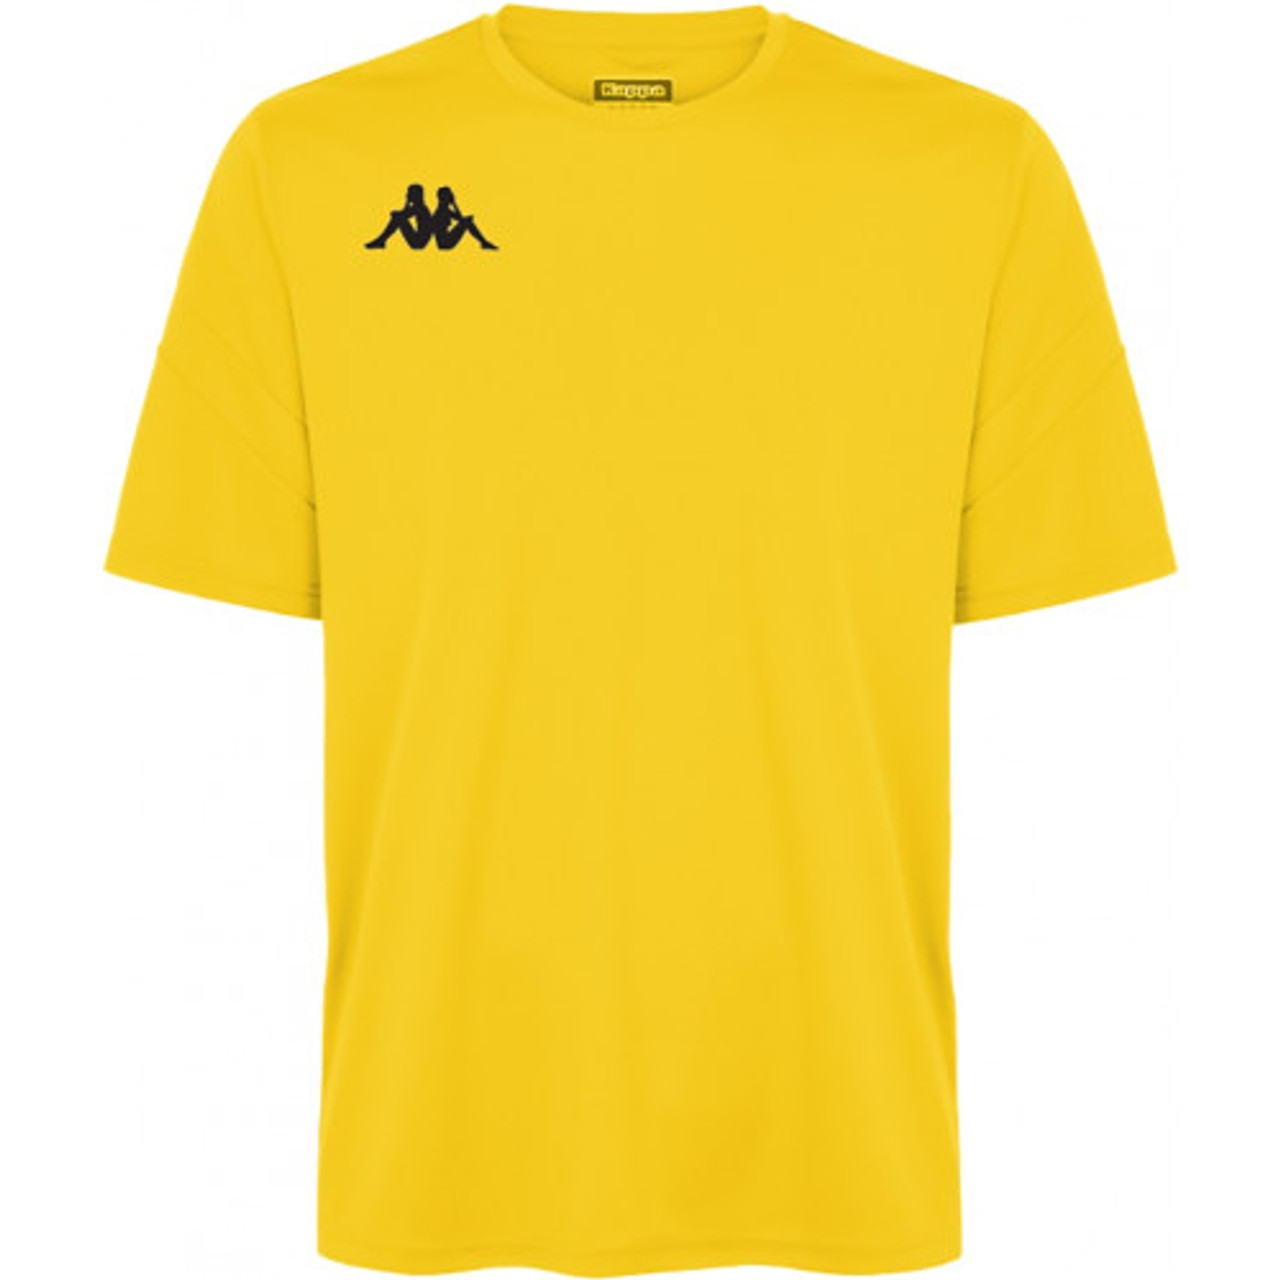 Dovo s/s Shirt Yellow Chrome - Only Sport Ltd